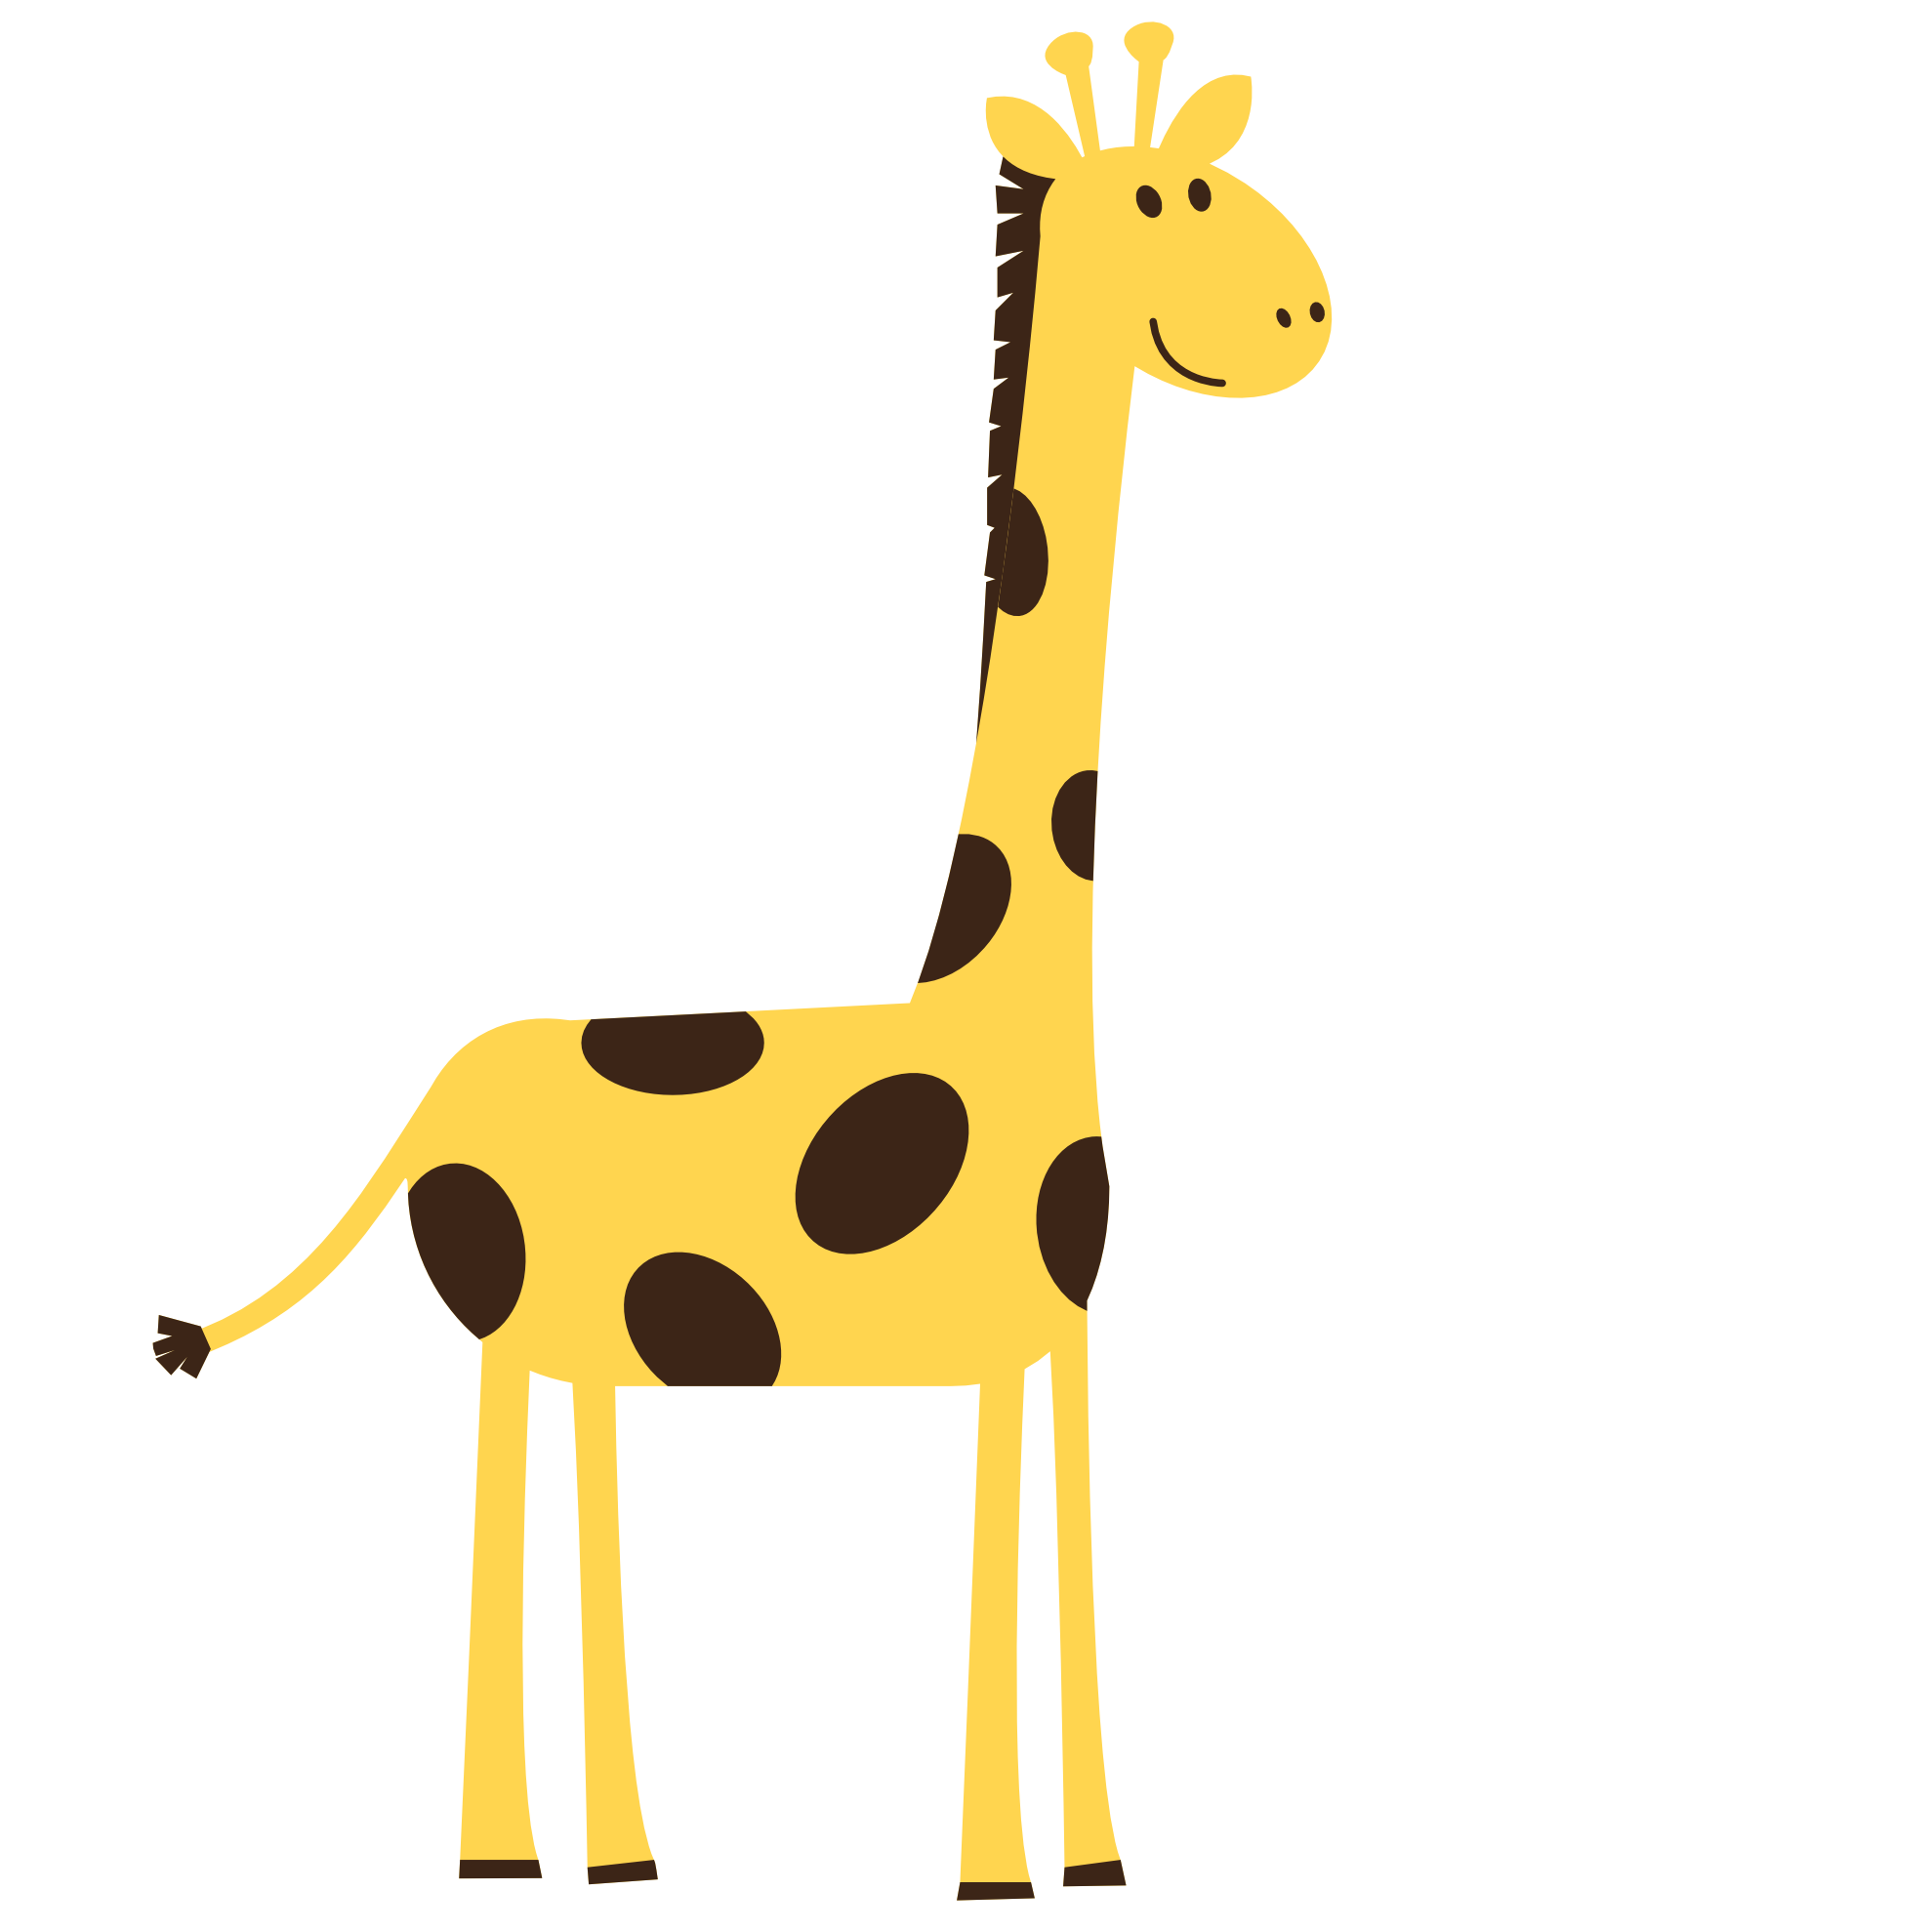 White Giraffe Silhouette Clip Art | Clipart Panda - Free Clipart ...